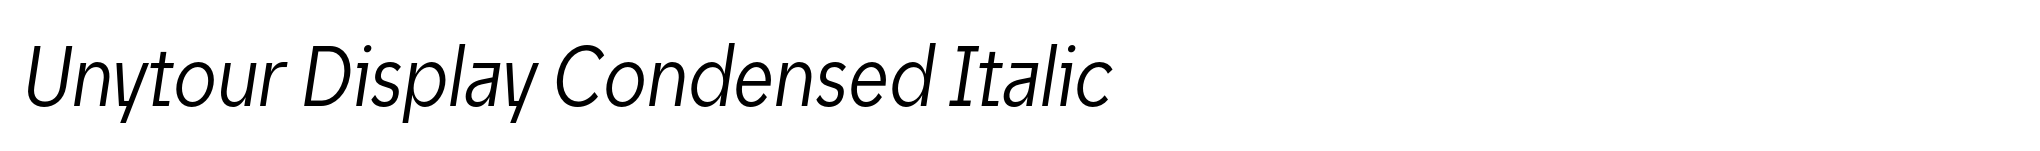 Unytour Display Condensed Italic image